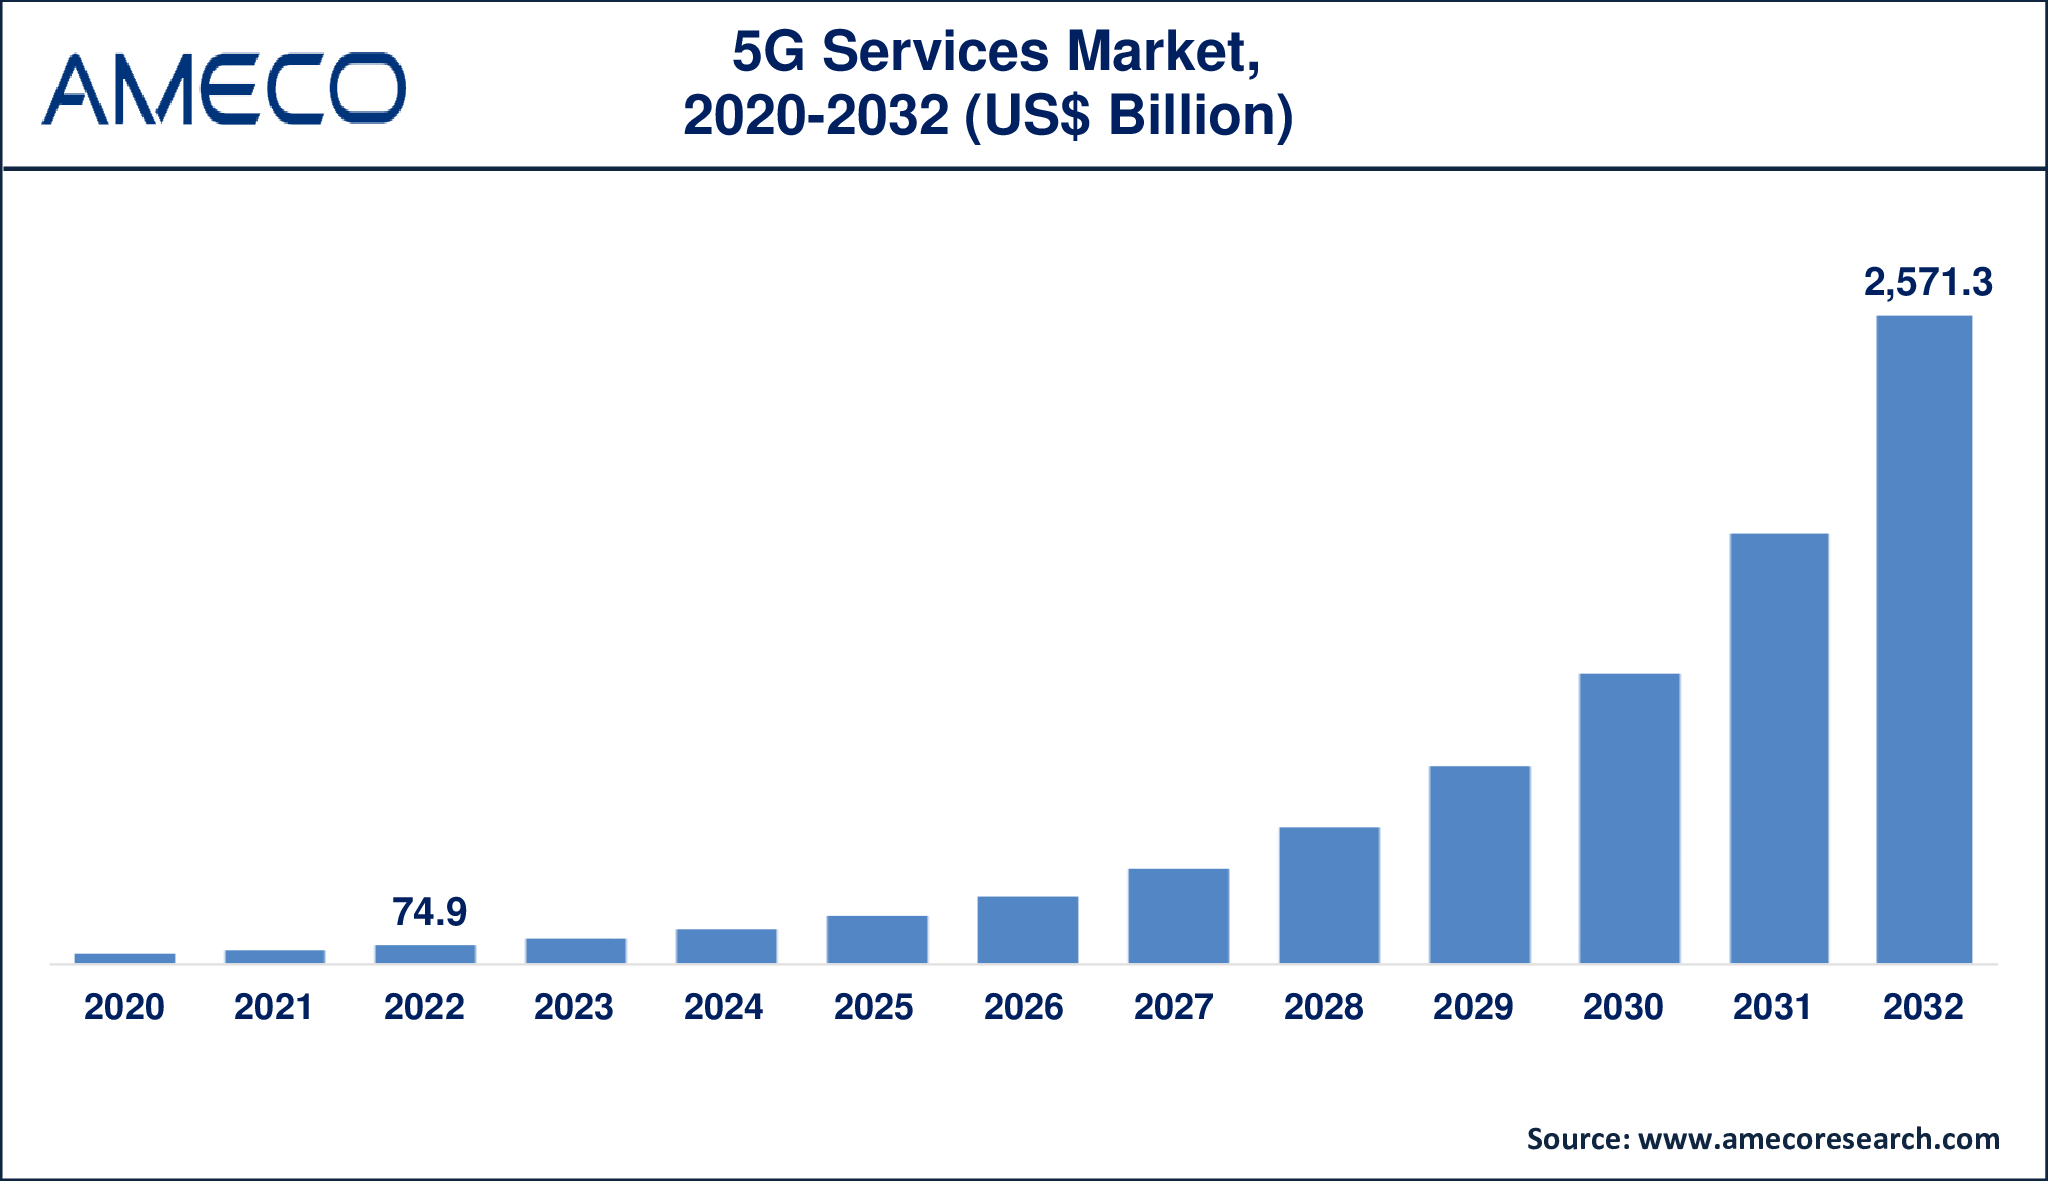 5G Services Market Dynamics